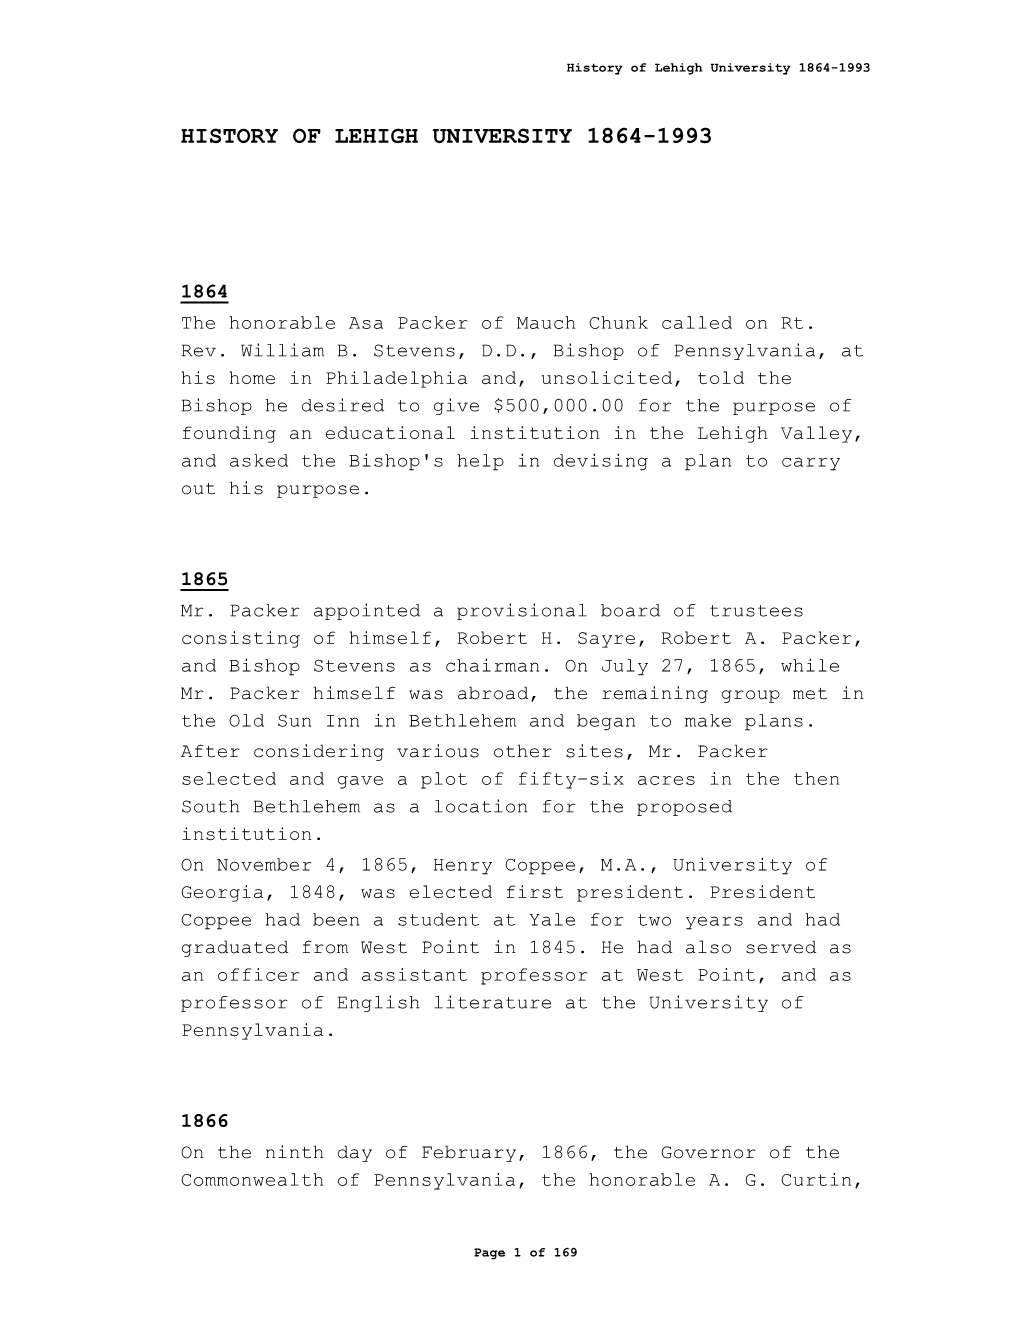 Lehigh History Chronology